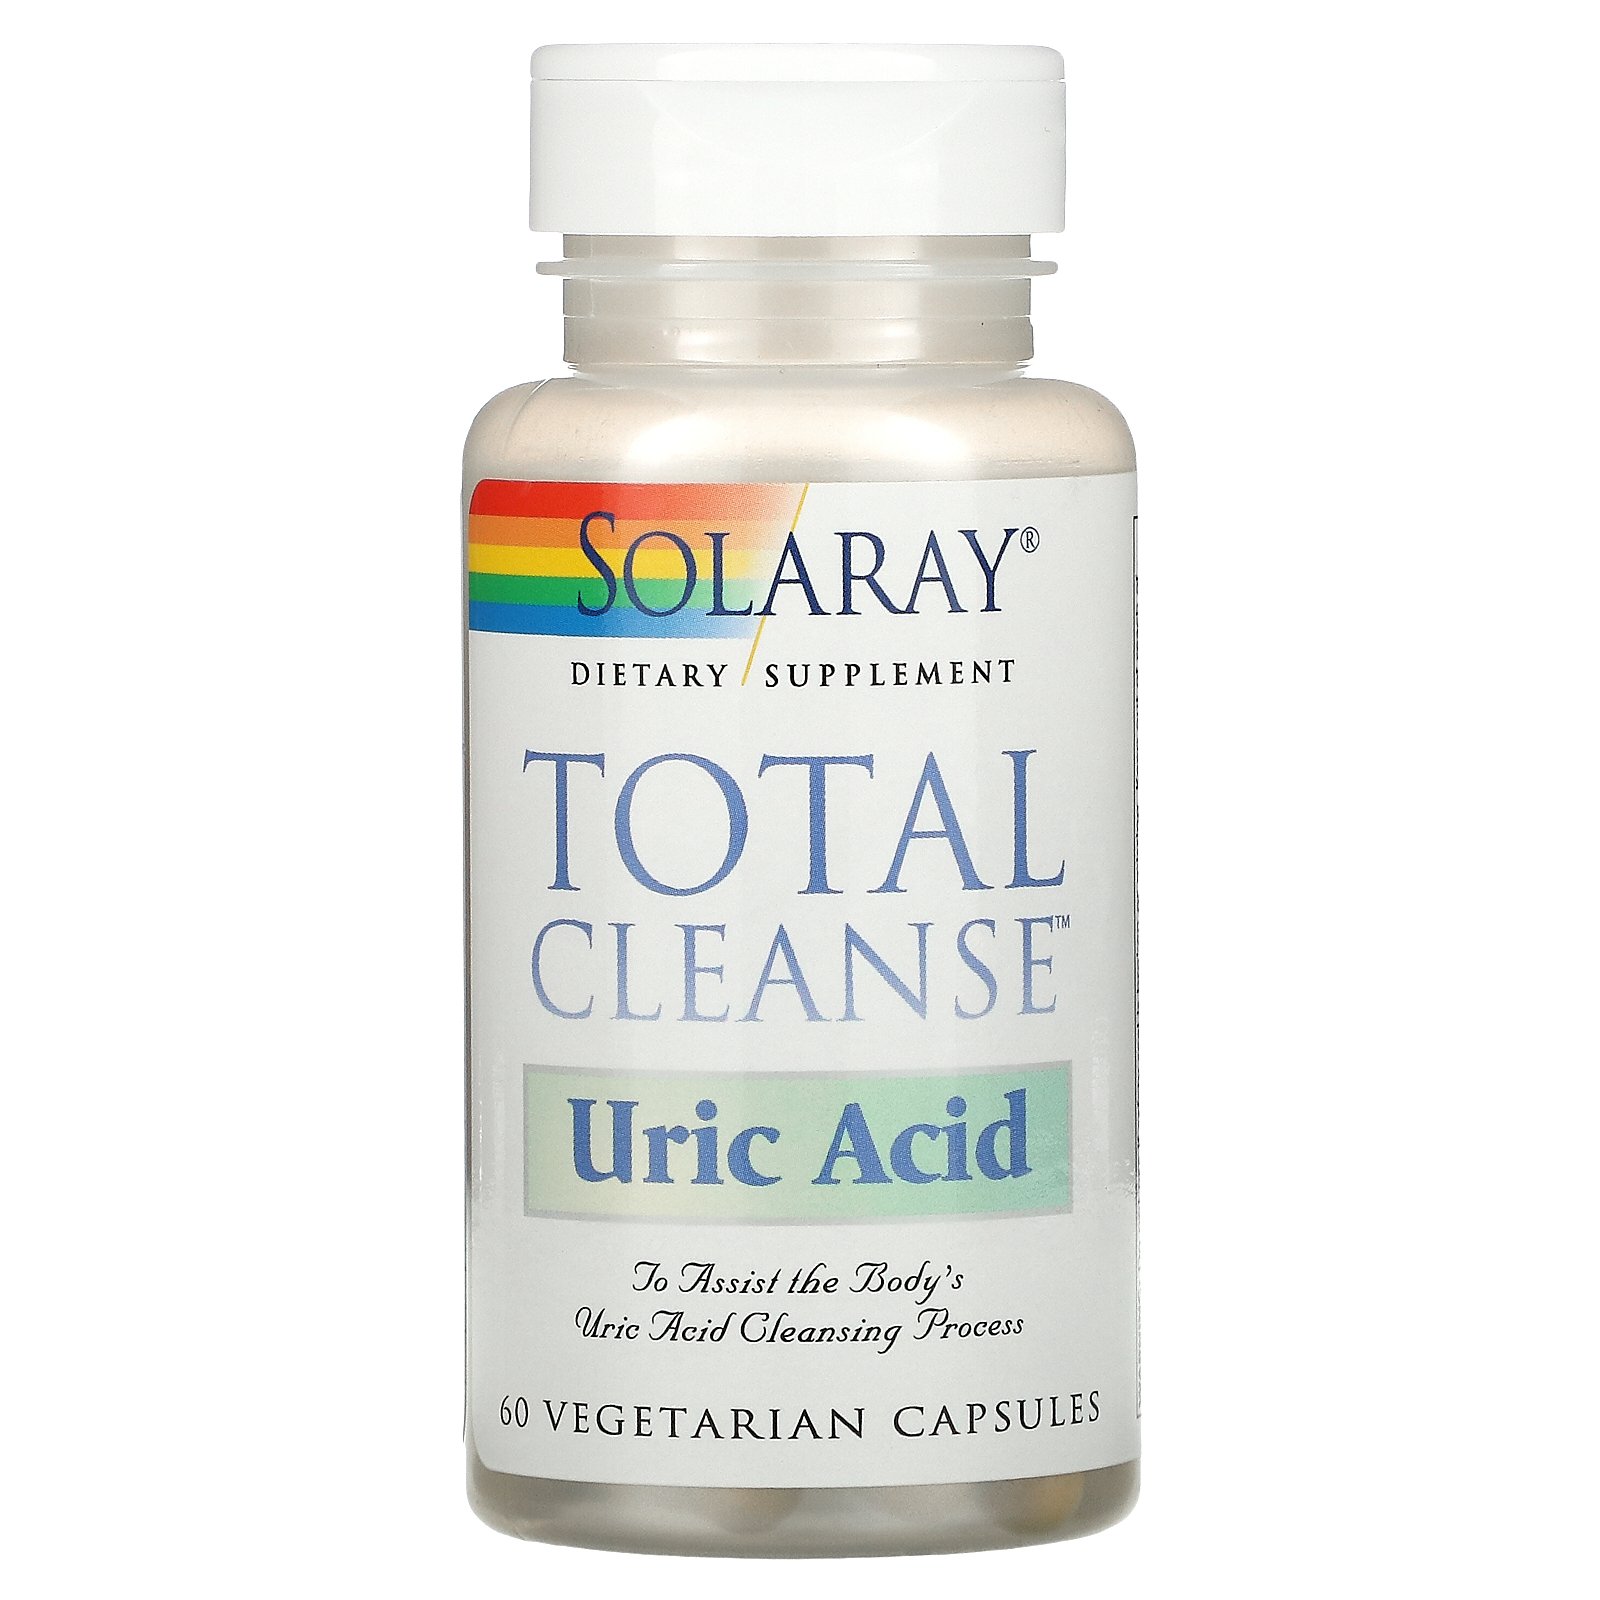 total cleanse acid uric